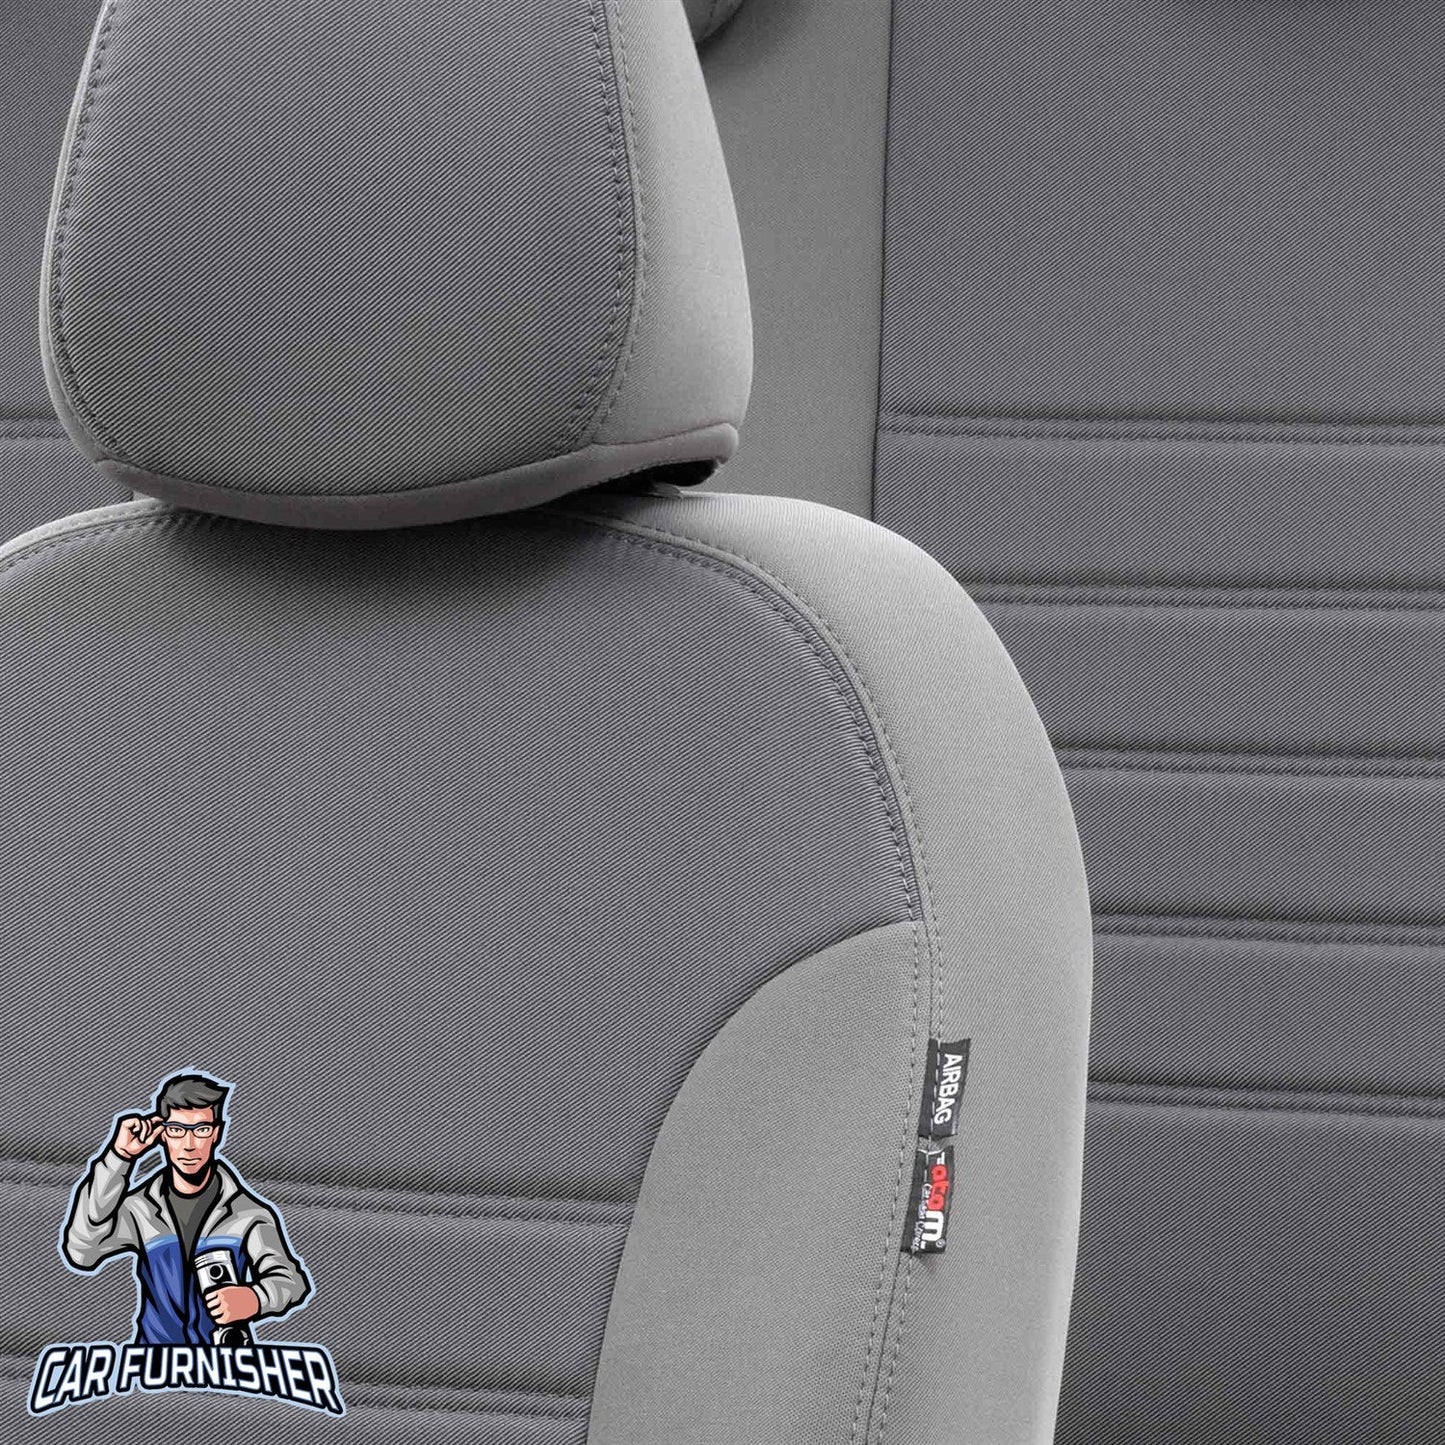 Nissan Almera Seat Covers Original Jacquard Design Gray Jacquard Fabric